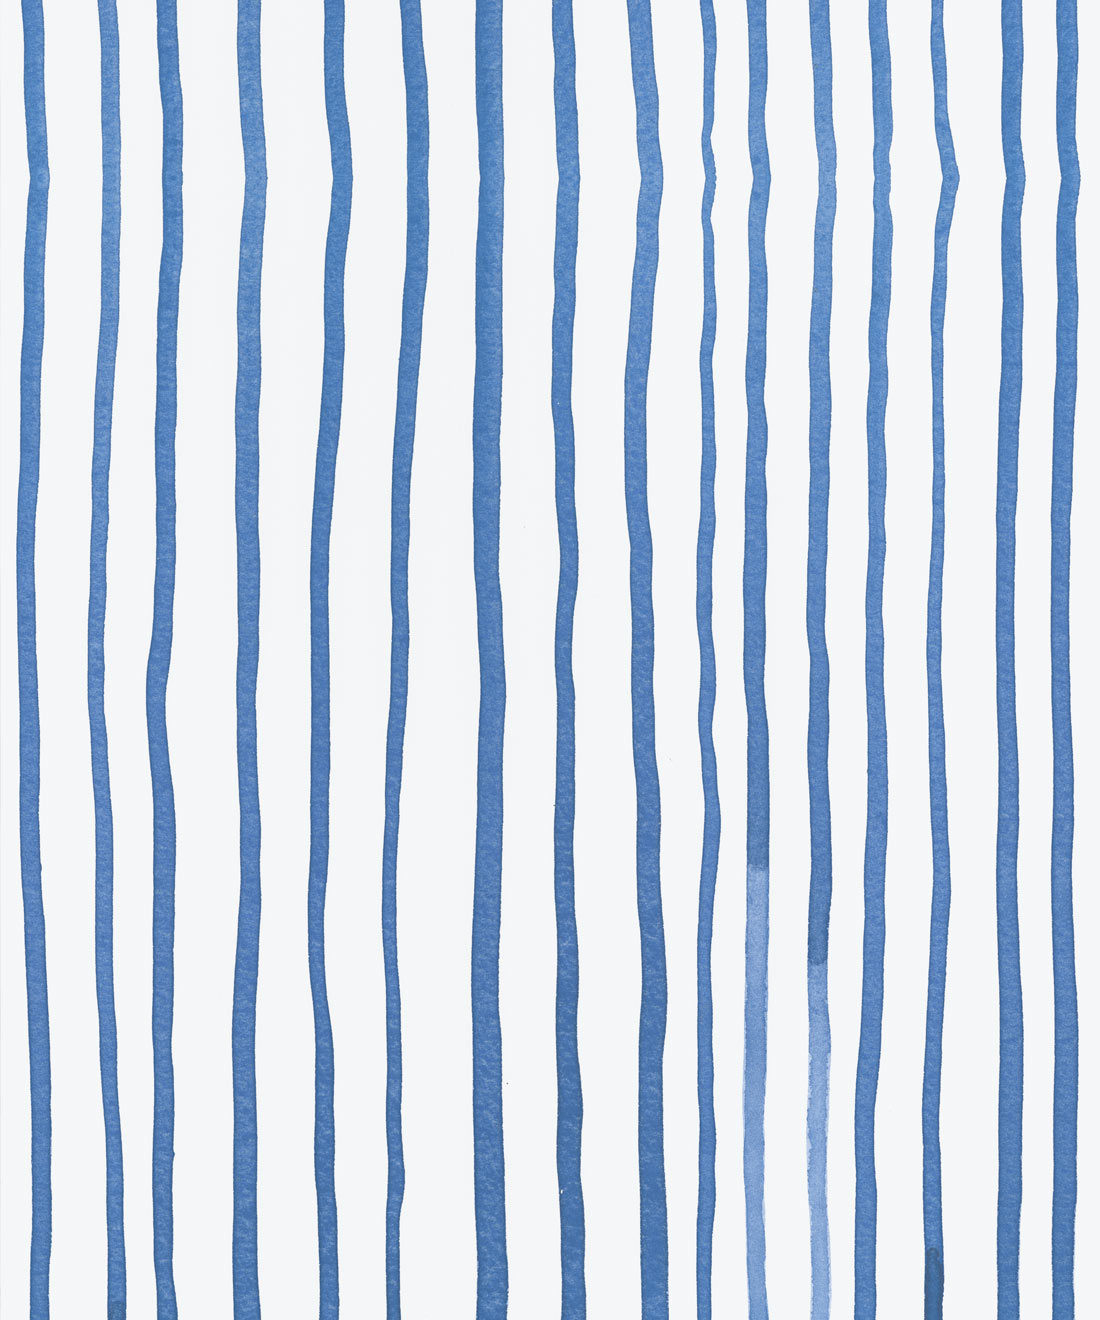 Download Stripes Striped Diagonal Royalty-Free Stock Illustration Image